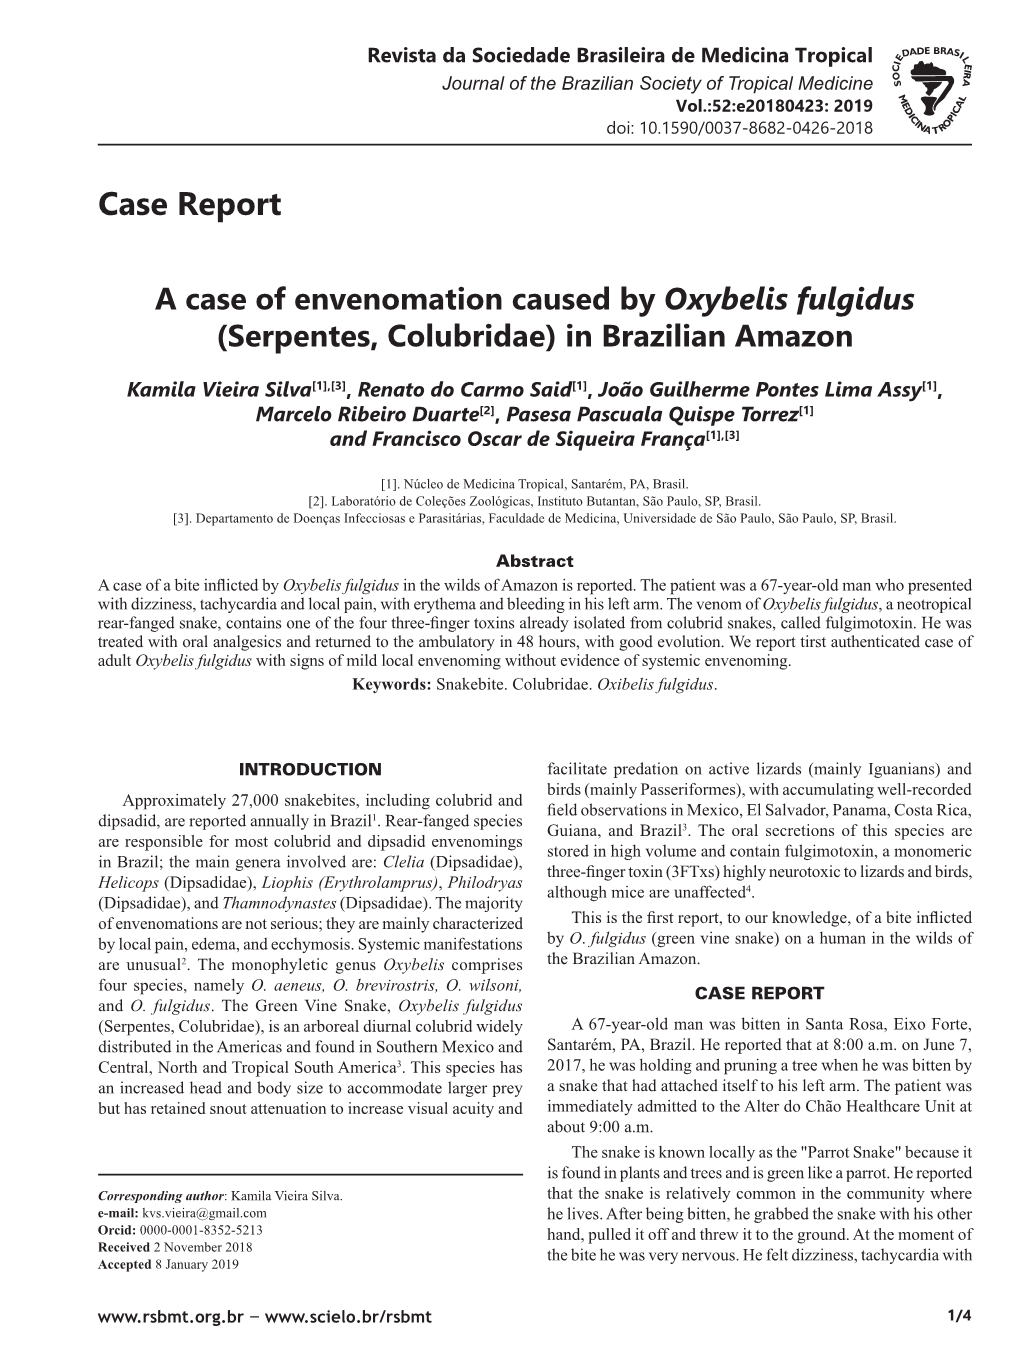 A Case of Envenomation Caused by Oxybelis Fulgidus (Serpentes, Colubridae) in Brazilian Amazon